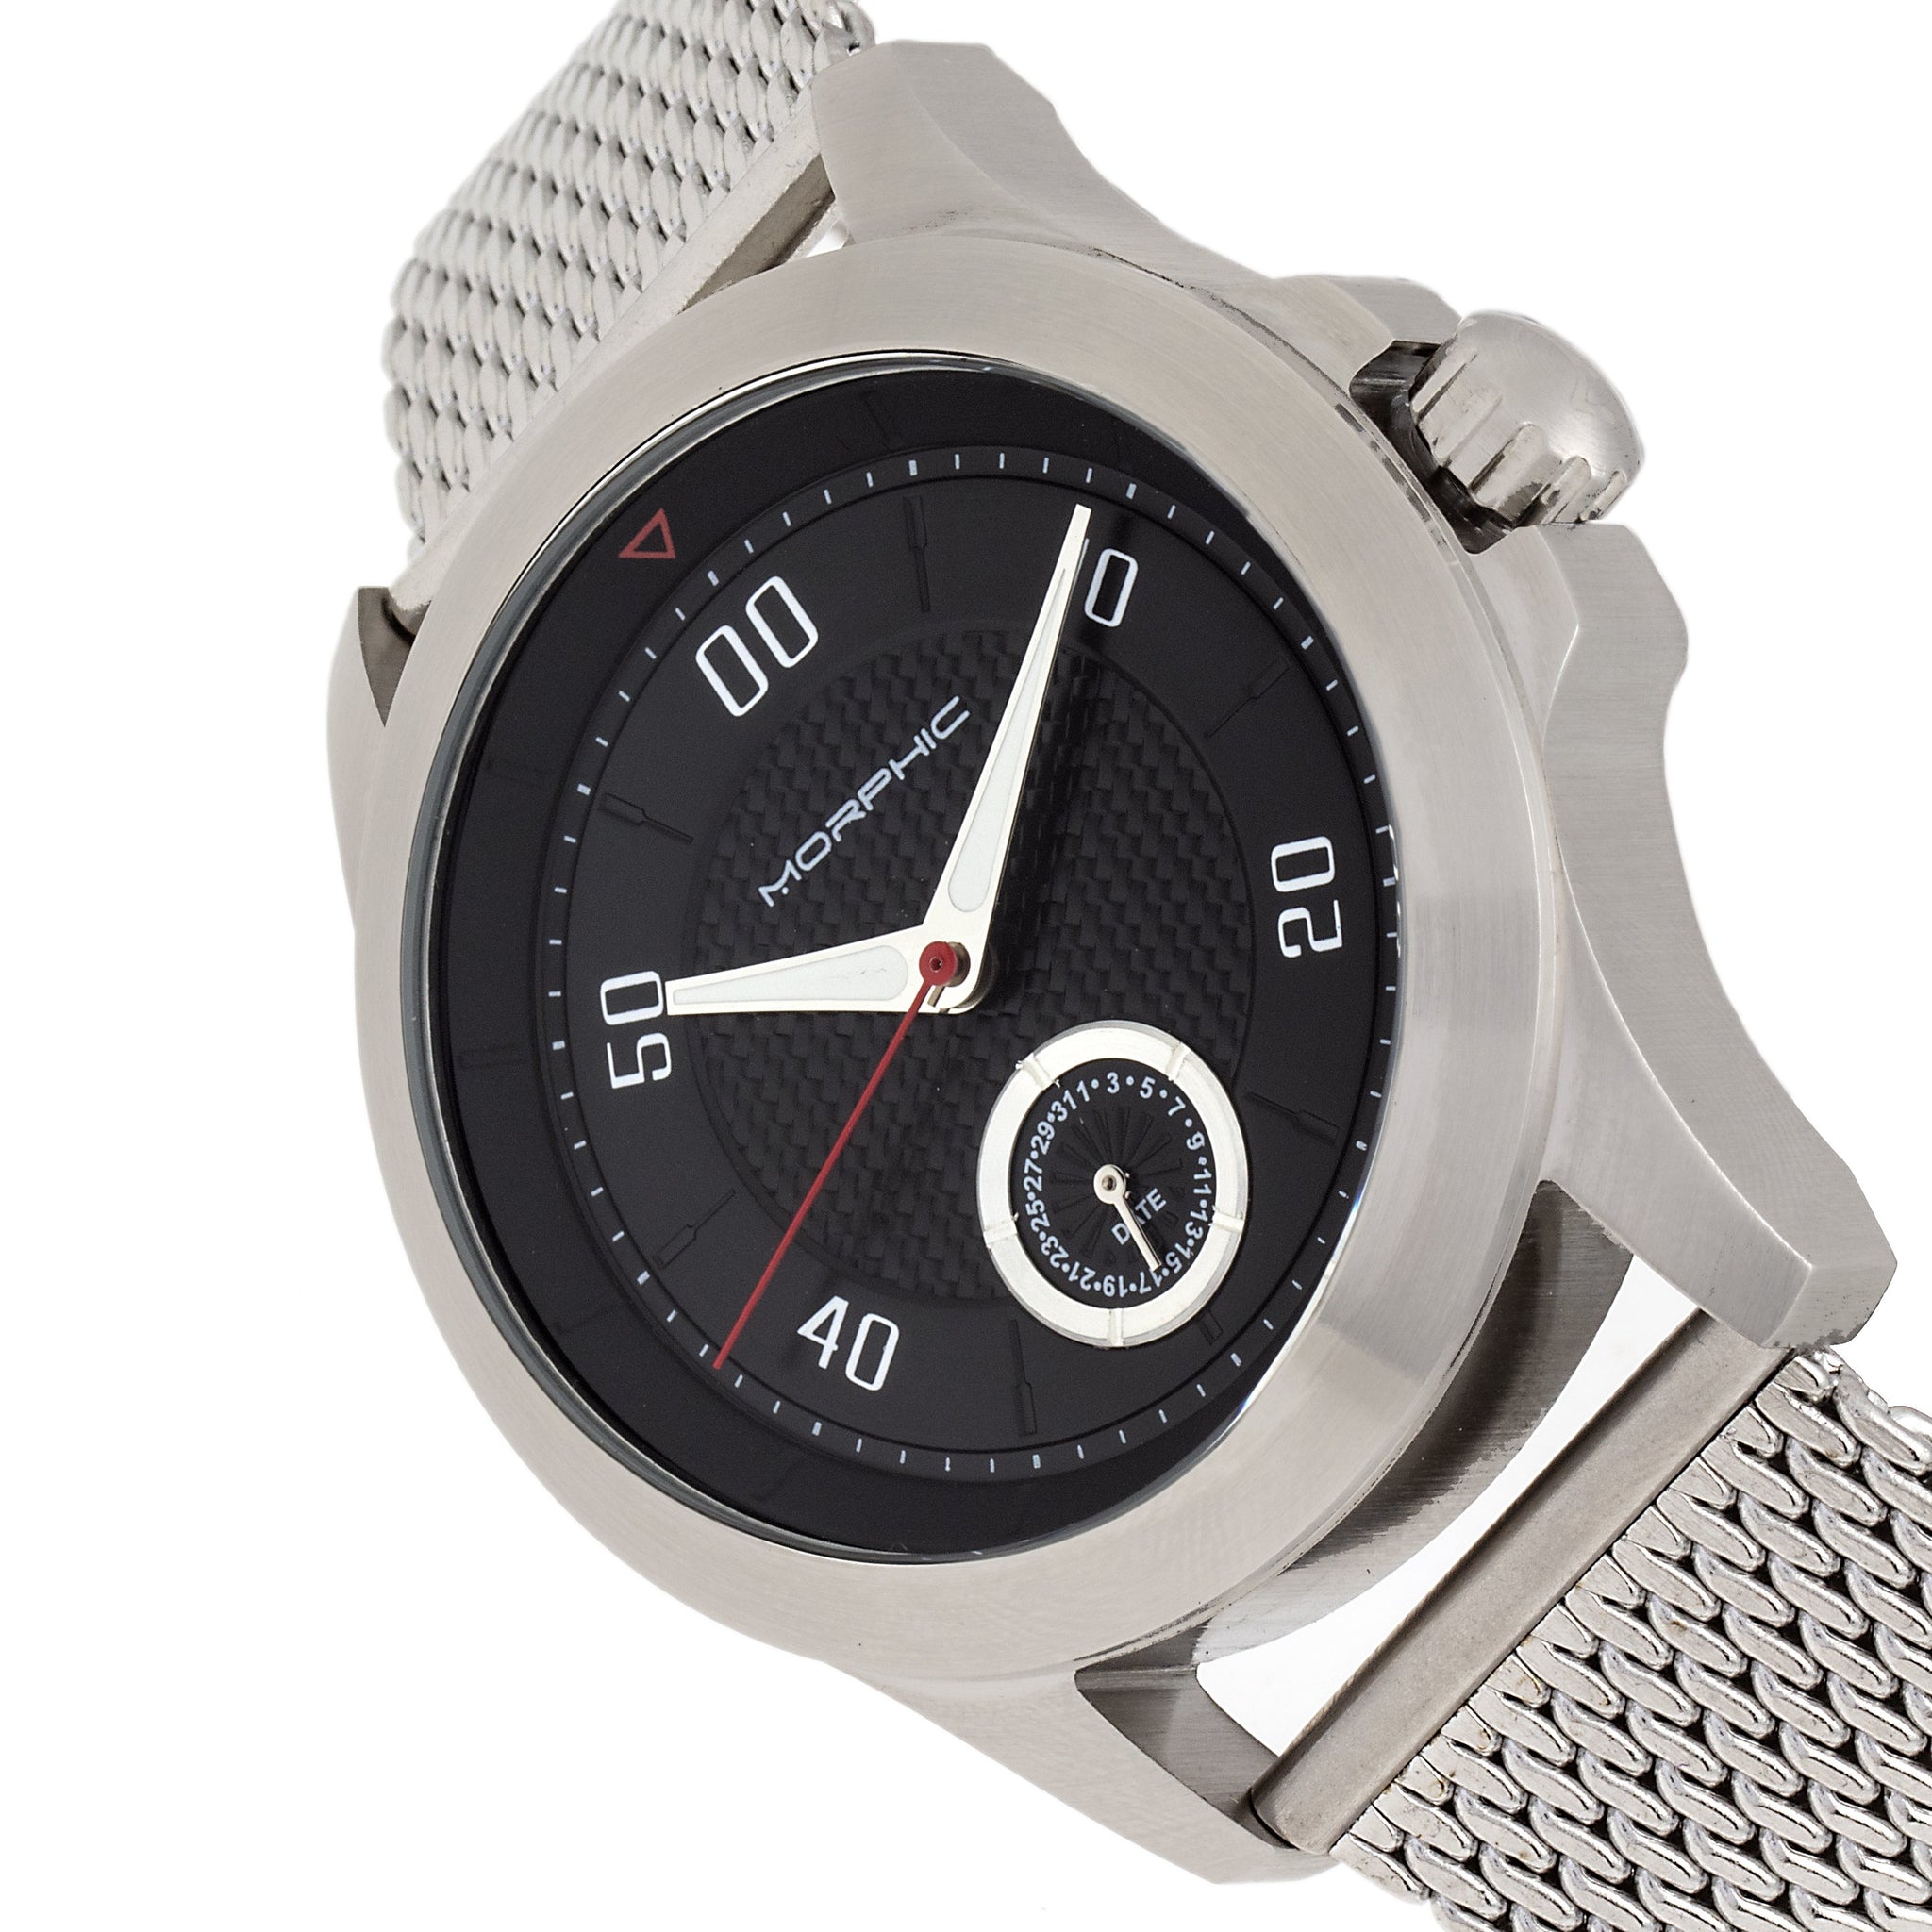 Morphic M80 Series Bracelet Watch w/Date - Silver/Black - MPH8002